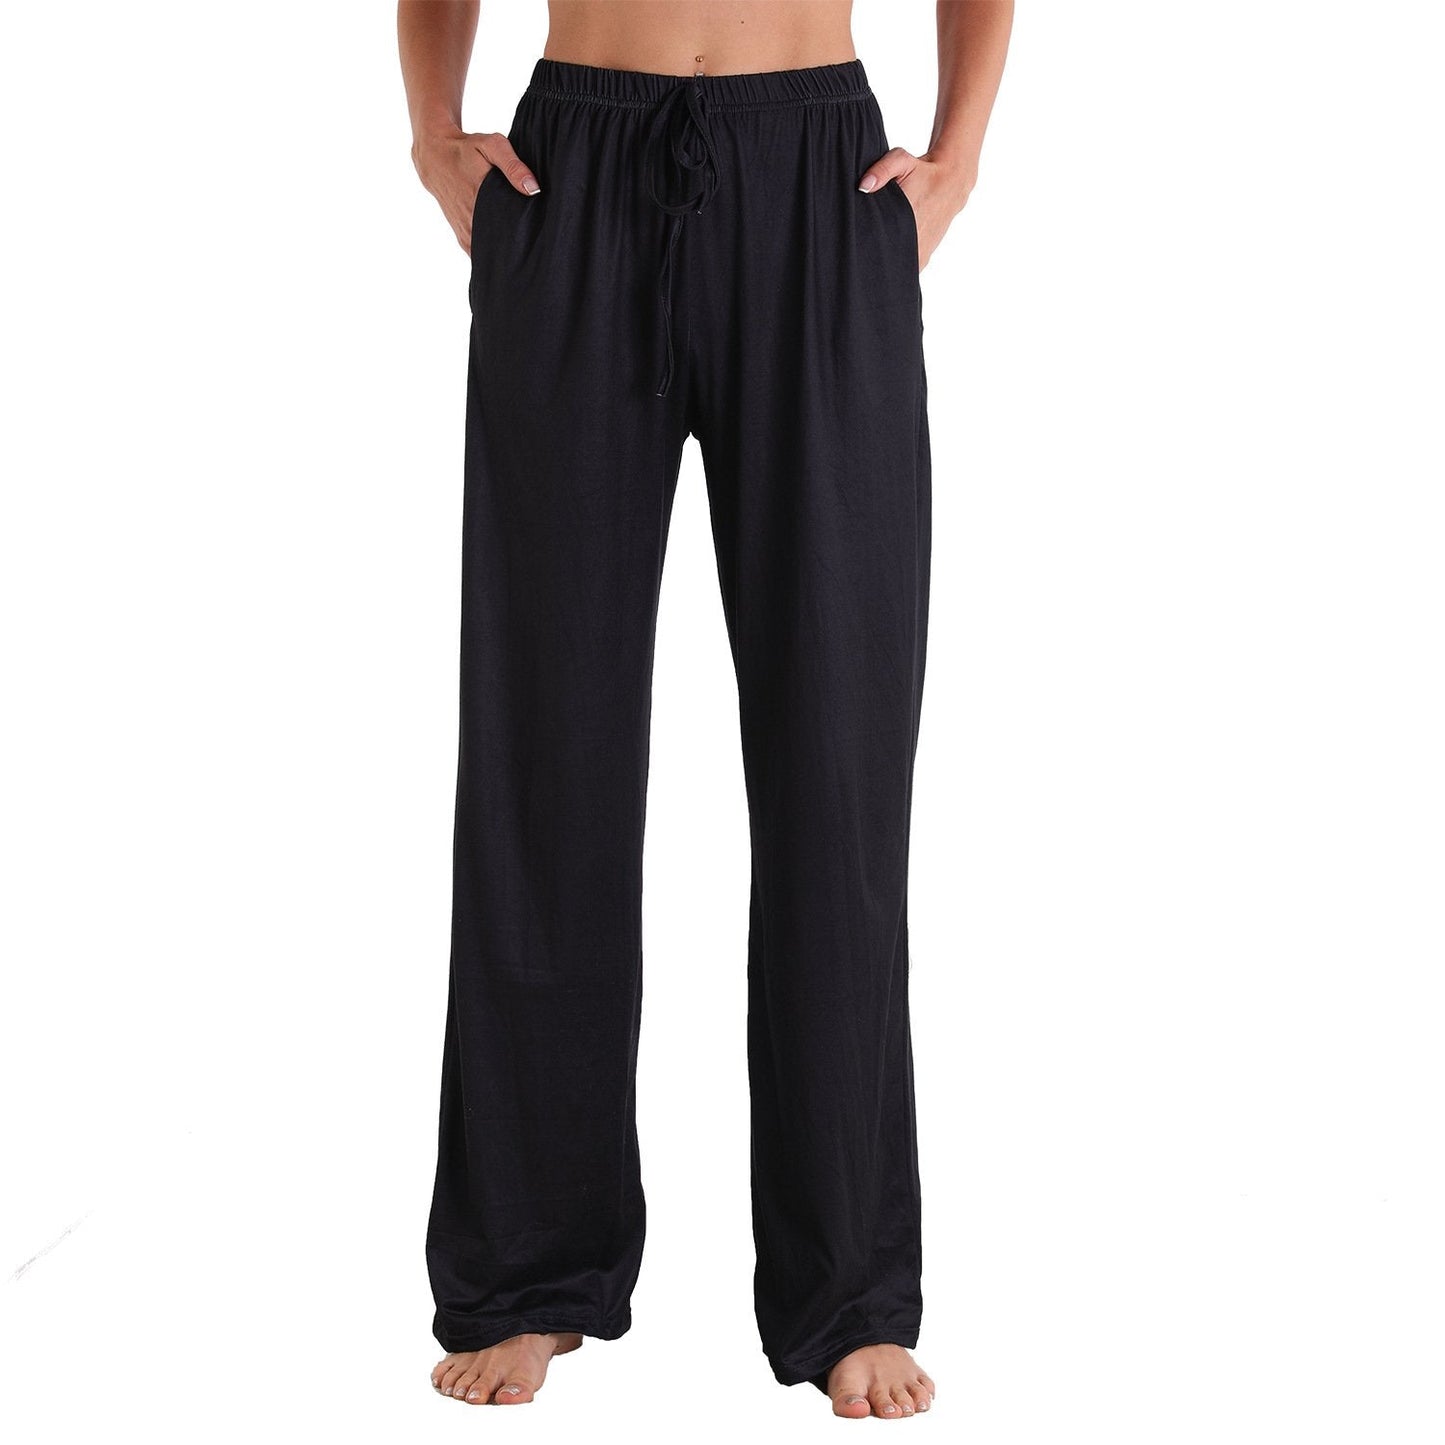 Leisure Women Comfortable Pants with Pocket-Pajamas-3014-S-Free Shipping Leatheretro